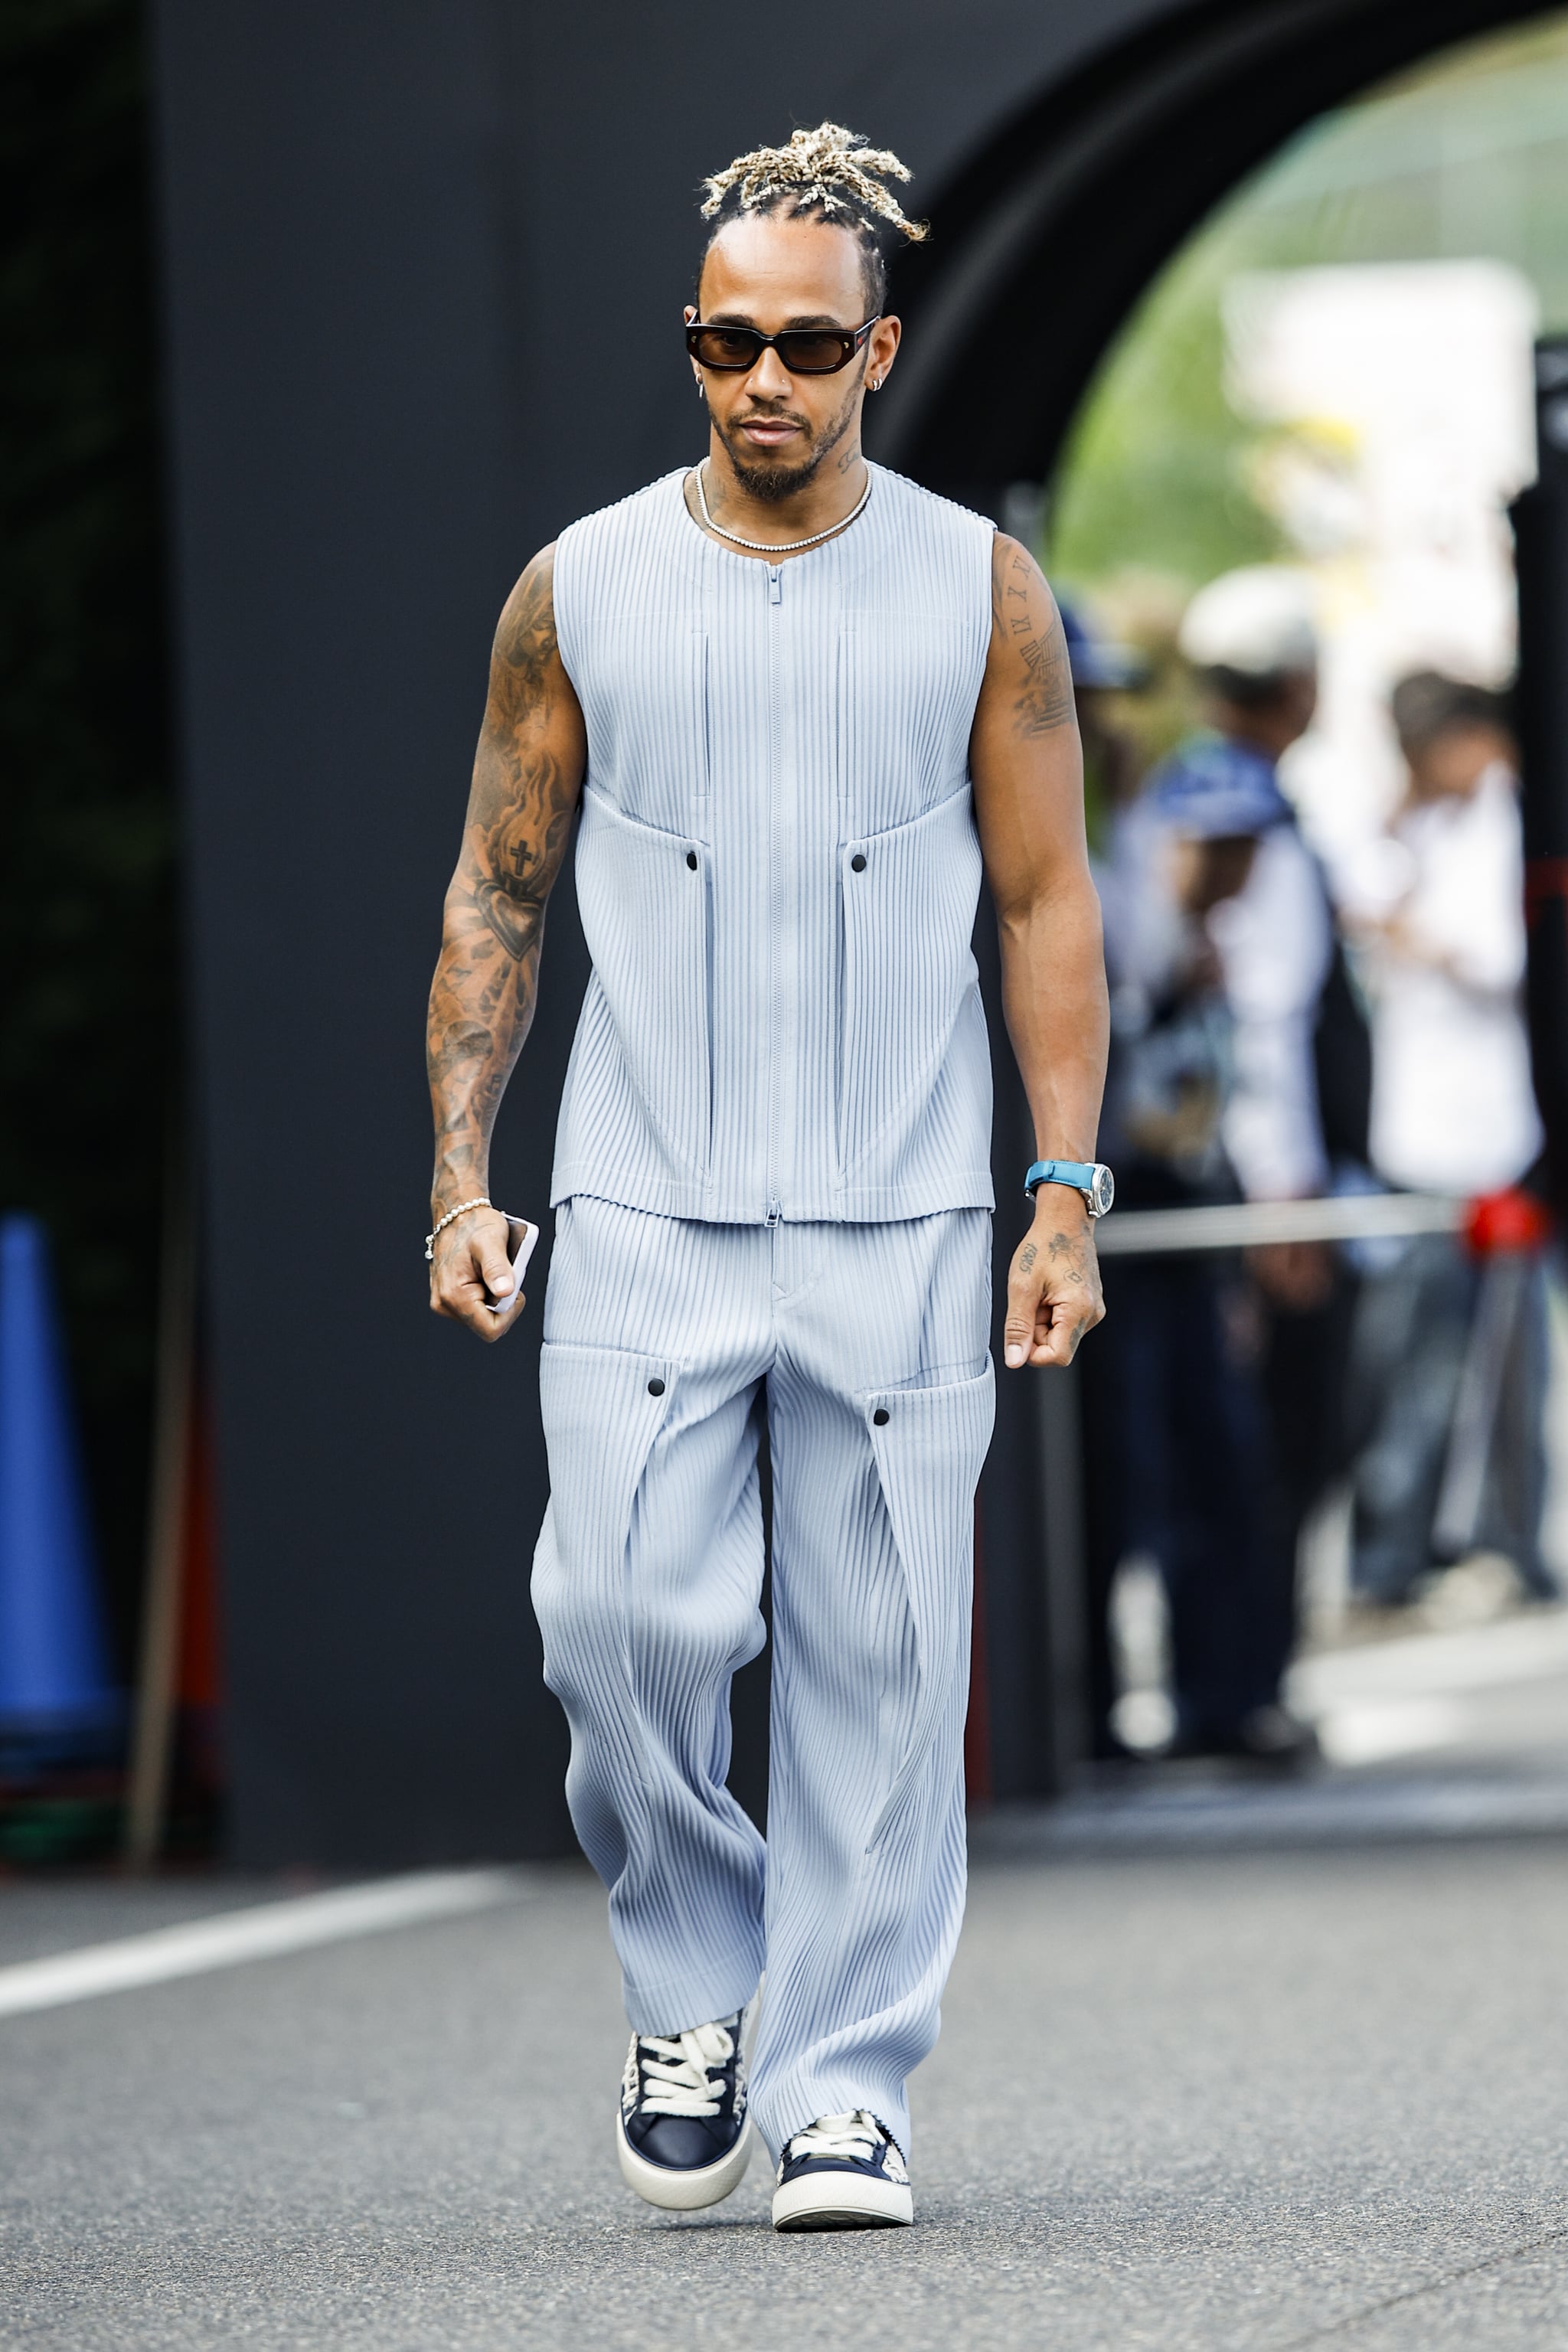 Lewis Hamilton shows softer side at Paris Fashion Week